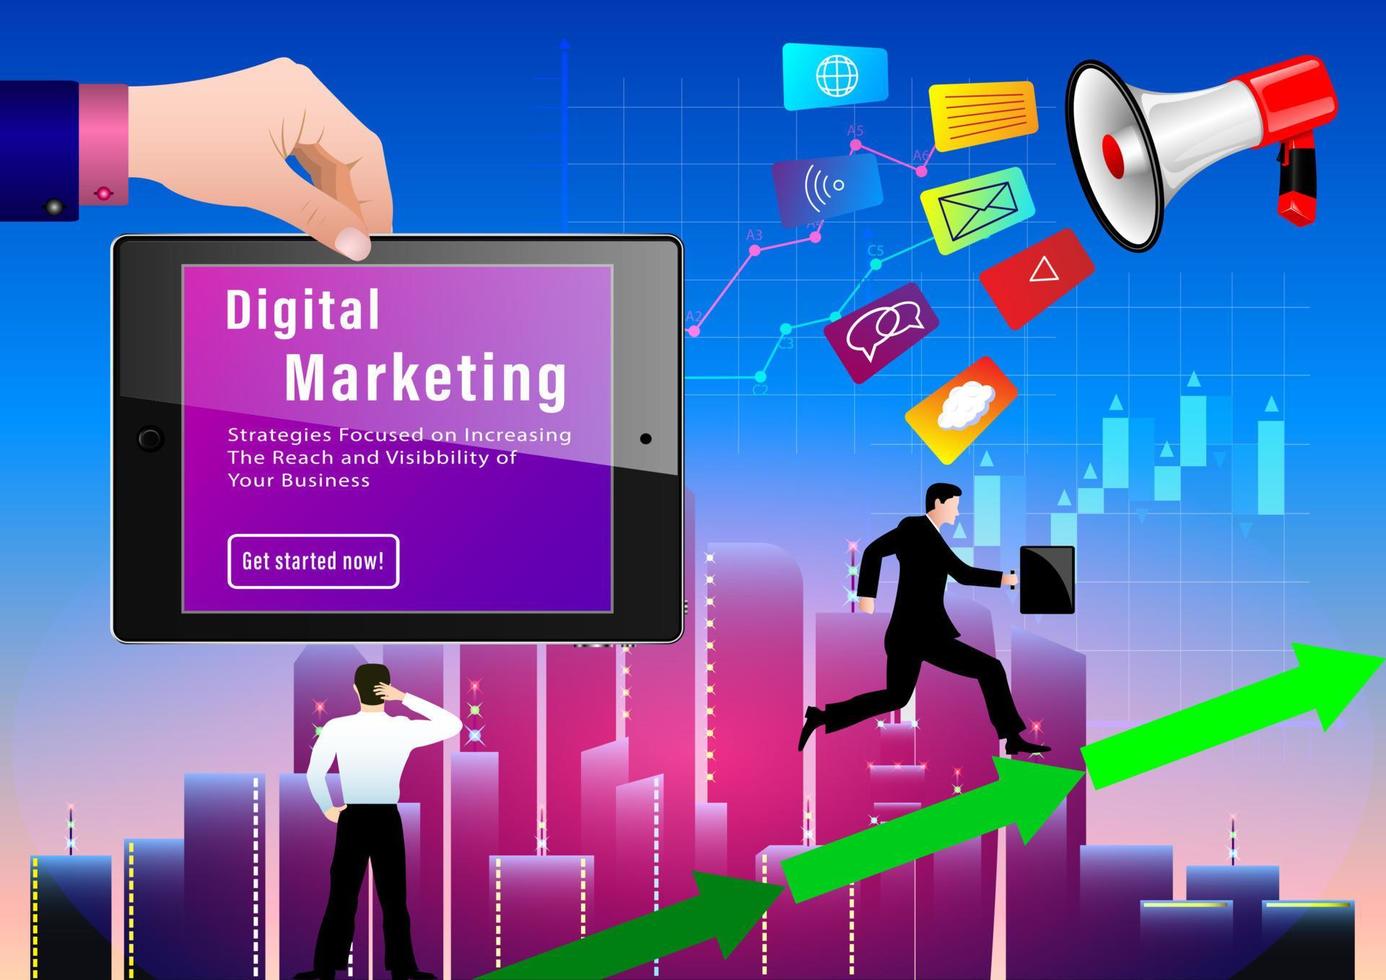 Digital Marketing web page background vector